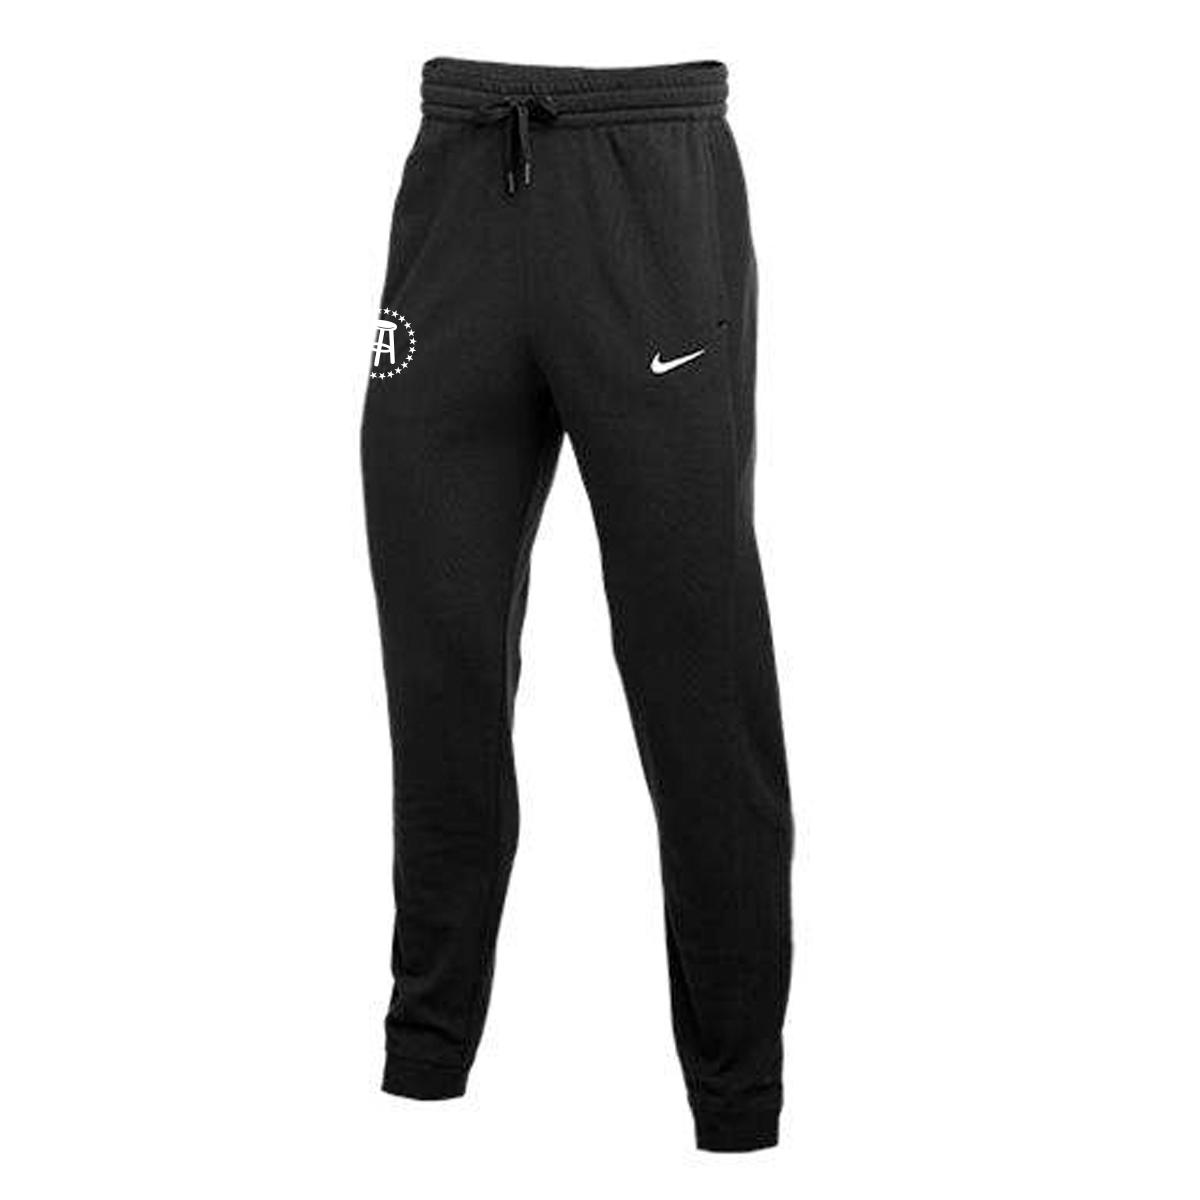 Barstool Nike Showtime Pants-Pants-Barstool Sports-Black-S-Barstool Sports